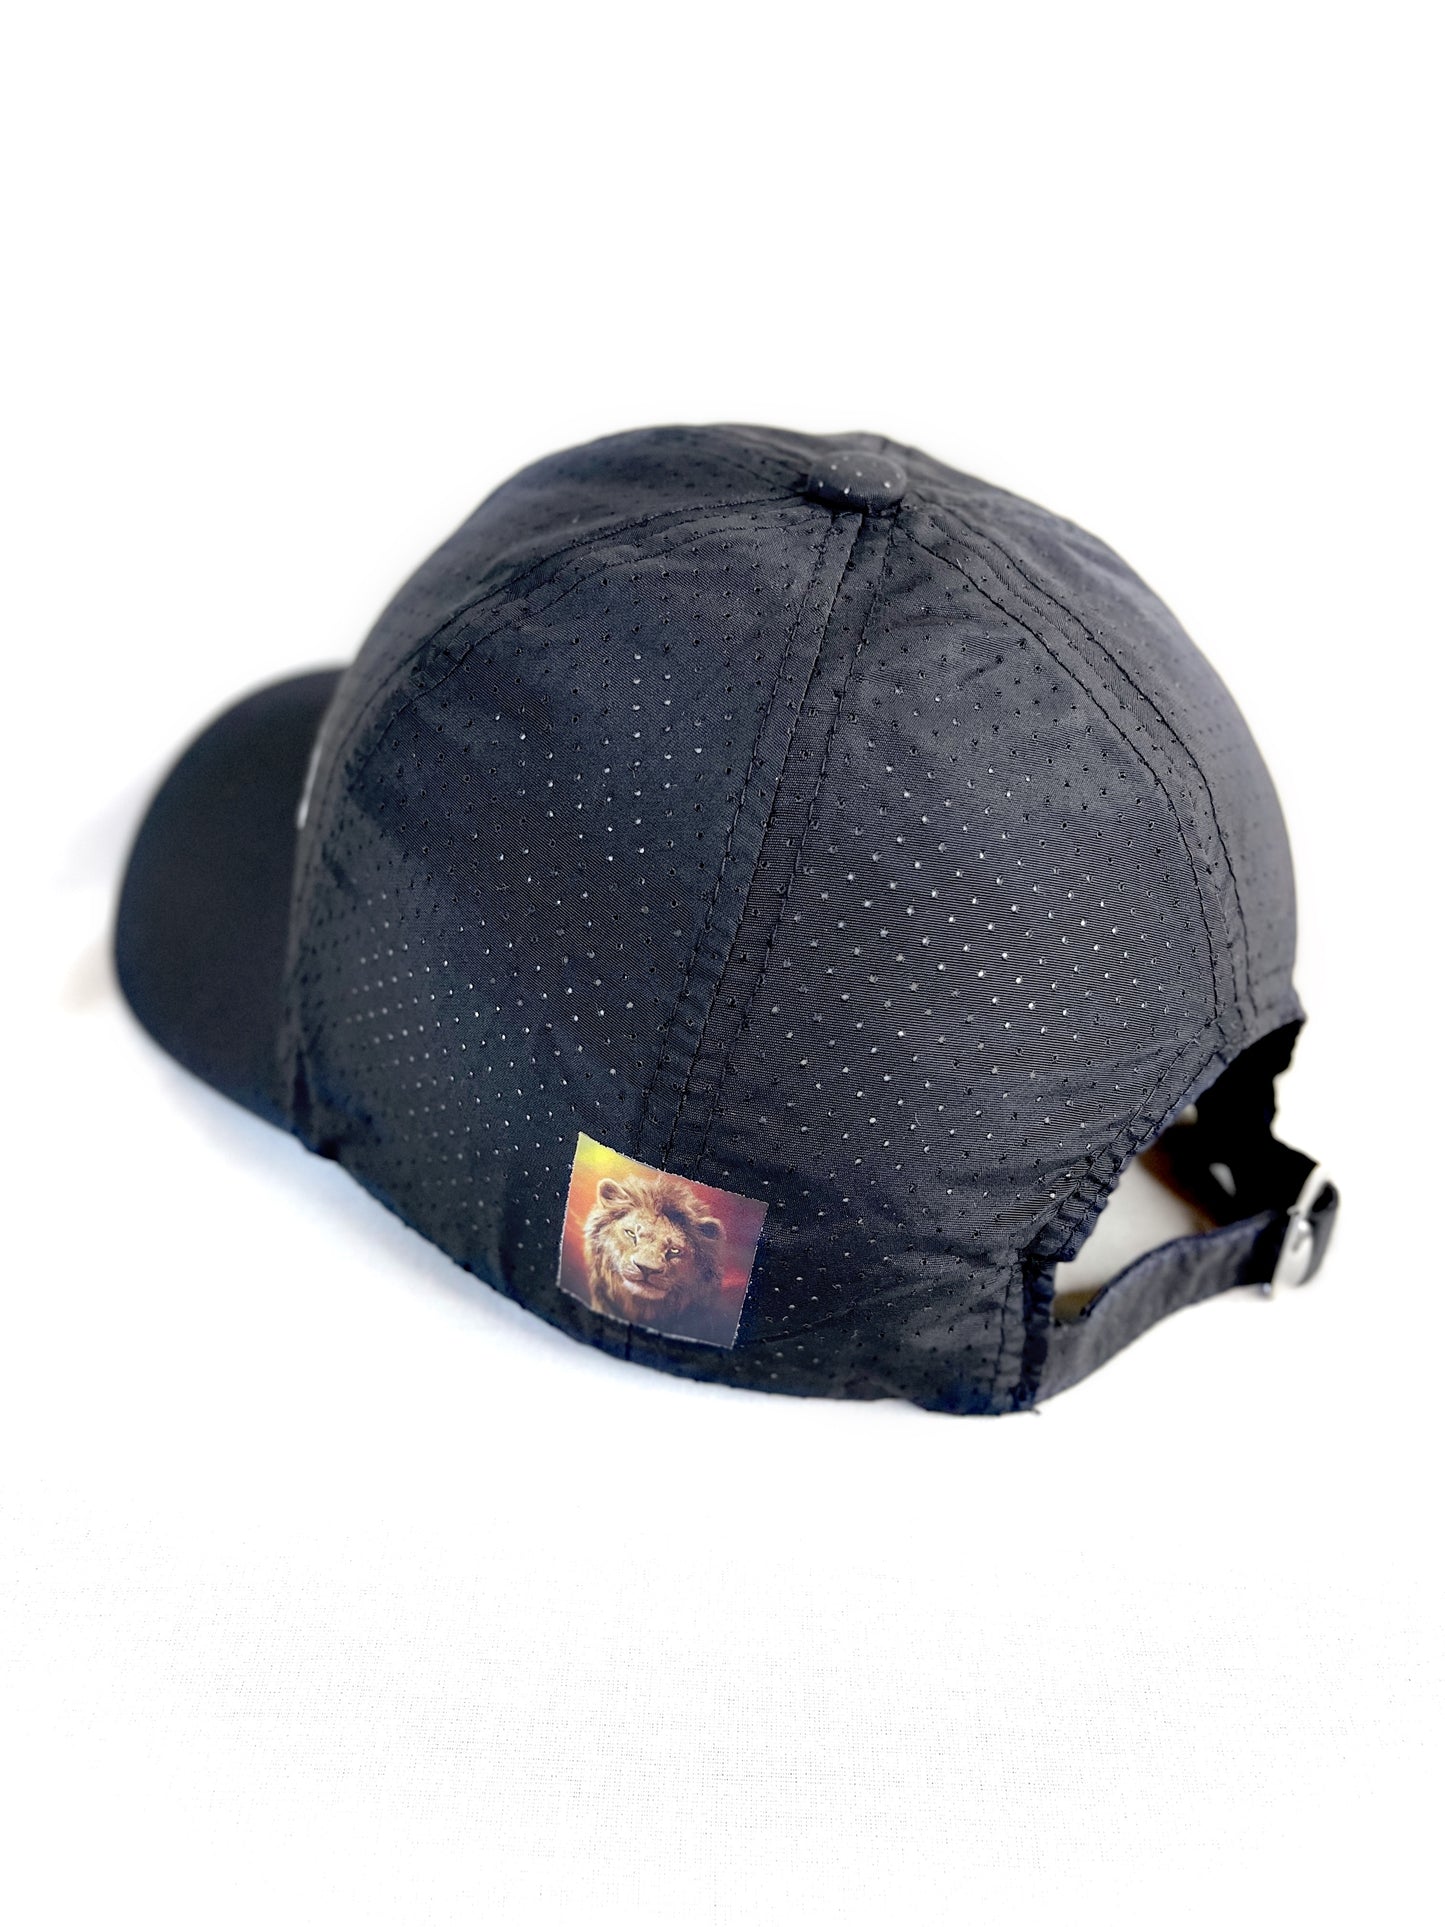 FitzOne Simple Sports Mesh Hat (Black)